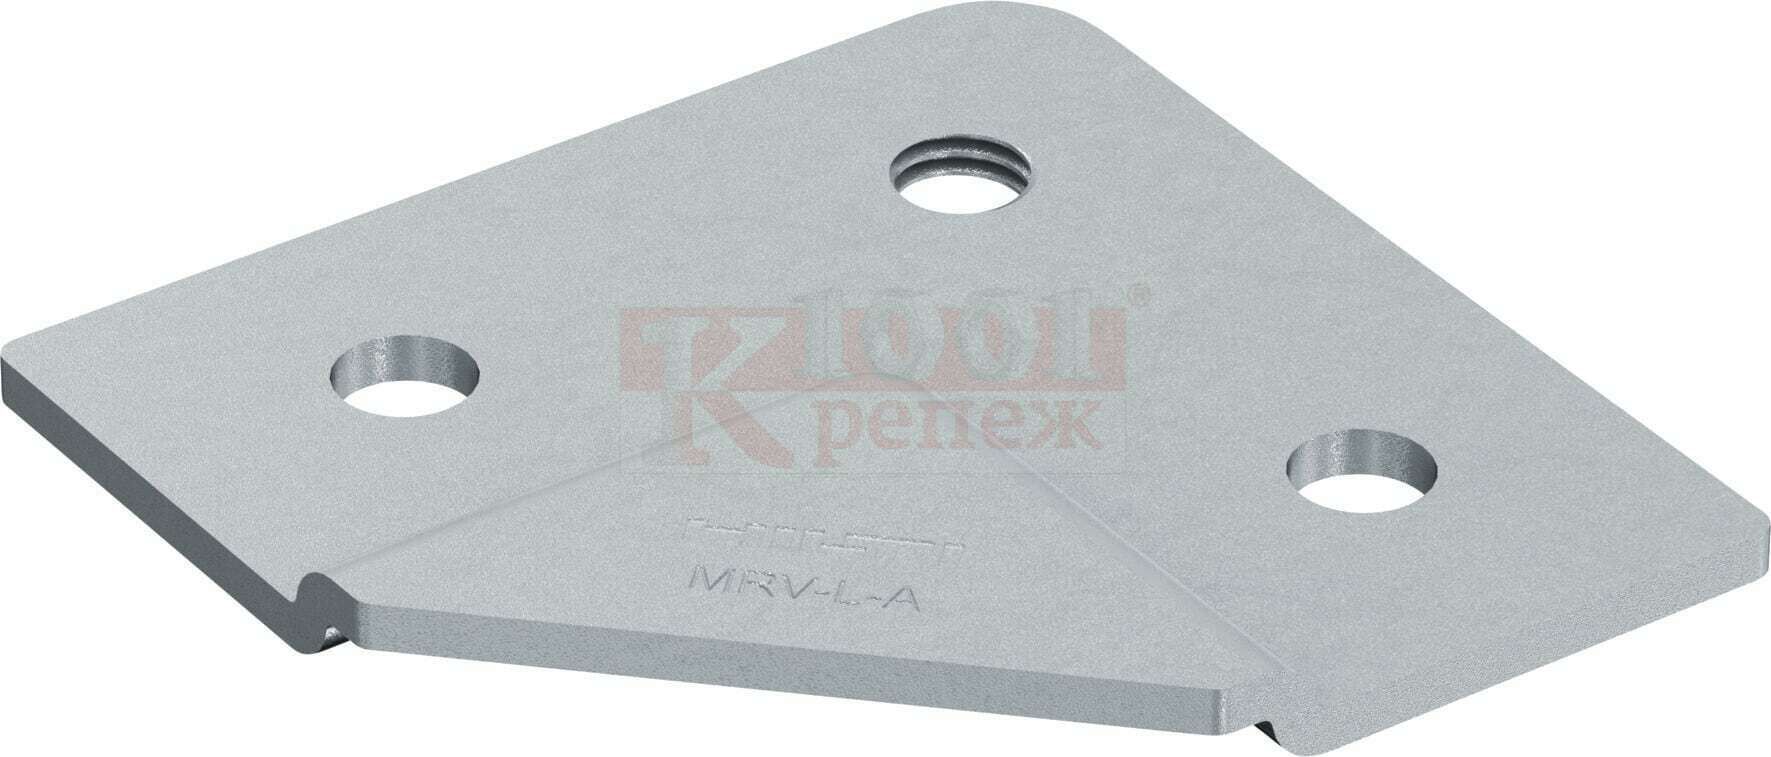 MRV-L-A Пластина соединительная HILTI для контроля уровня фальшпола ОЦ, 41x93.5x4 мм